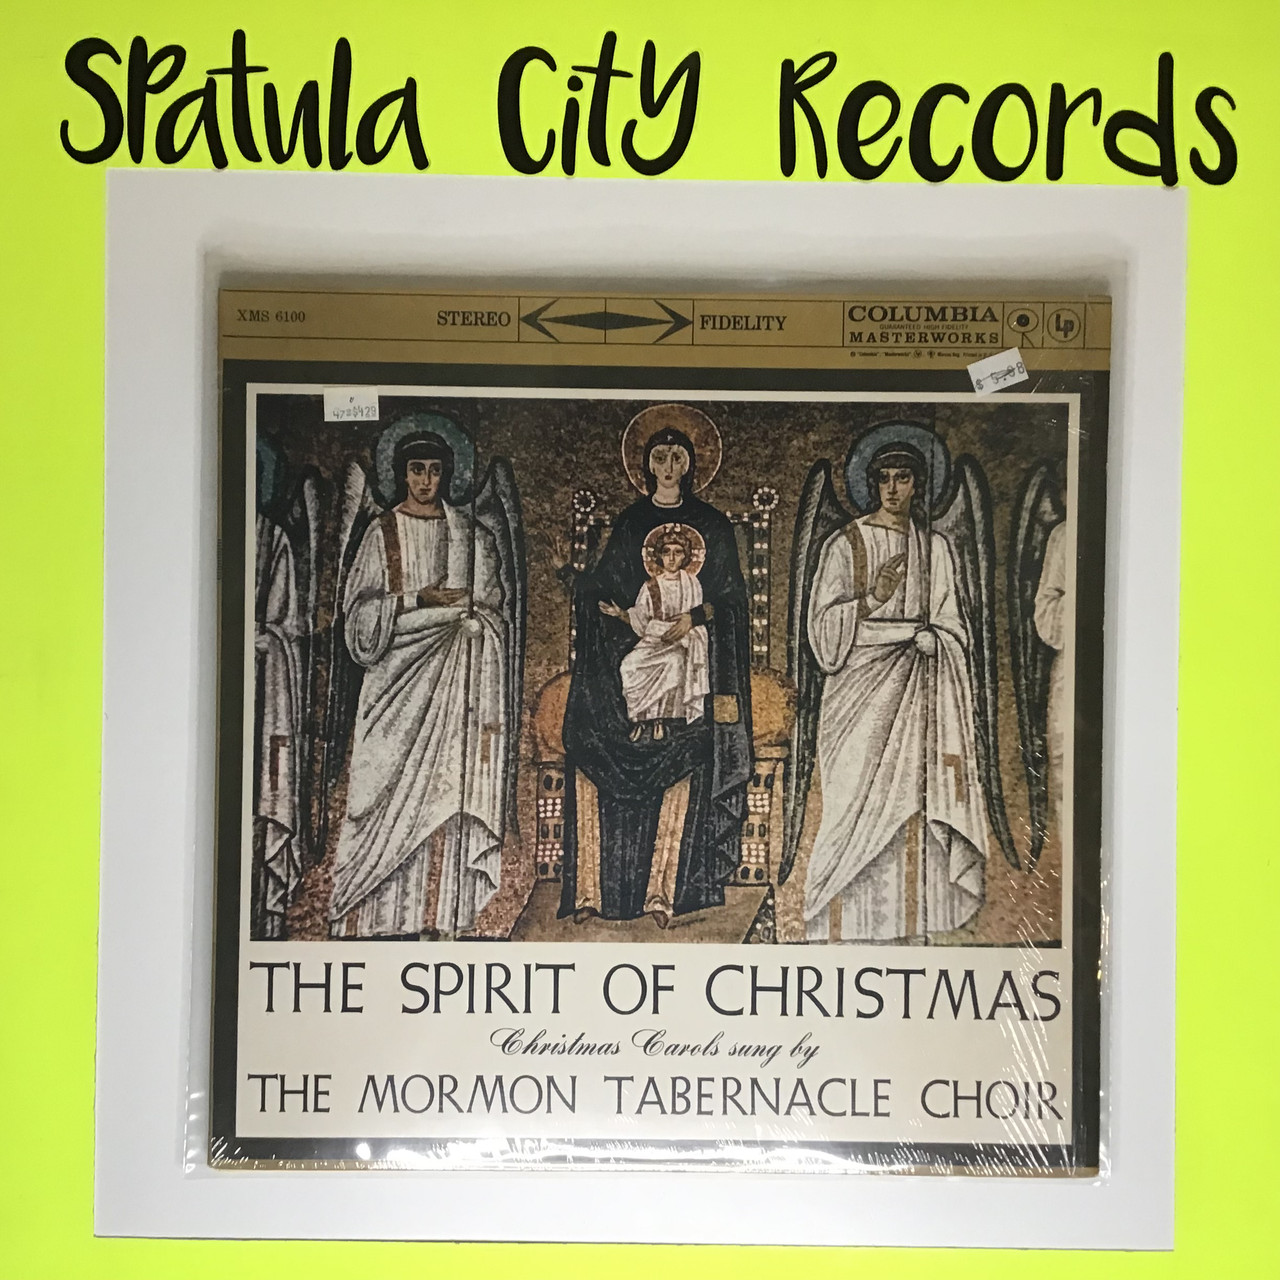 Mormon Tabernacle Choir - The Spirit of Christmas : Songs Sung by the Mormon Tabernacle Choir - vinyl record album LP